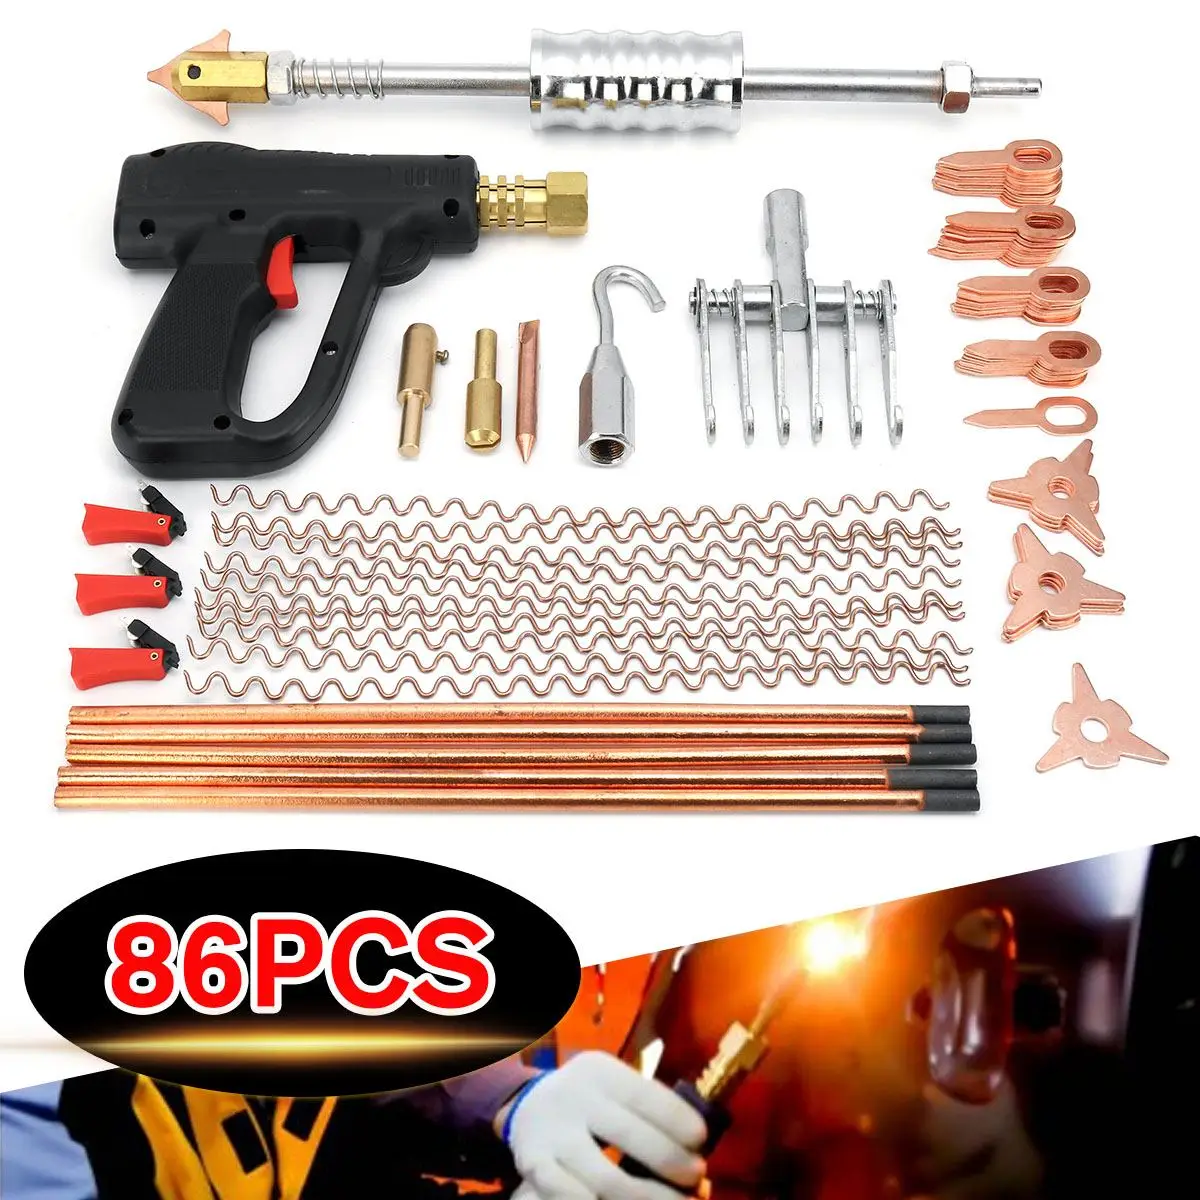 

86Pcs Car Body Dent Repair Puller Kit Dent Spot Repair Removal Device Welder Stud Mini Welding Machine Pulling Hammer Tool Kit